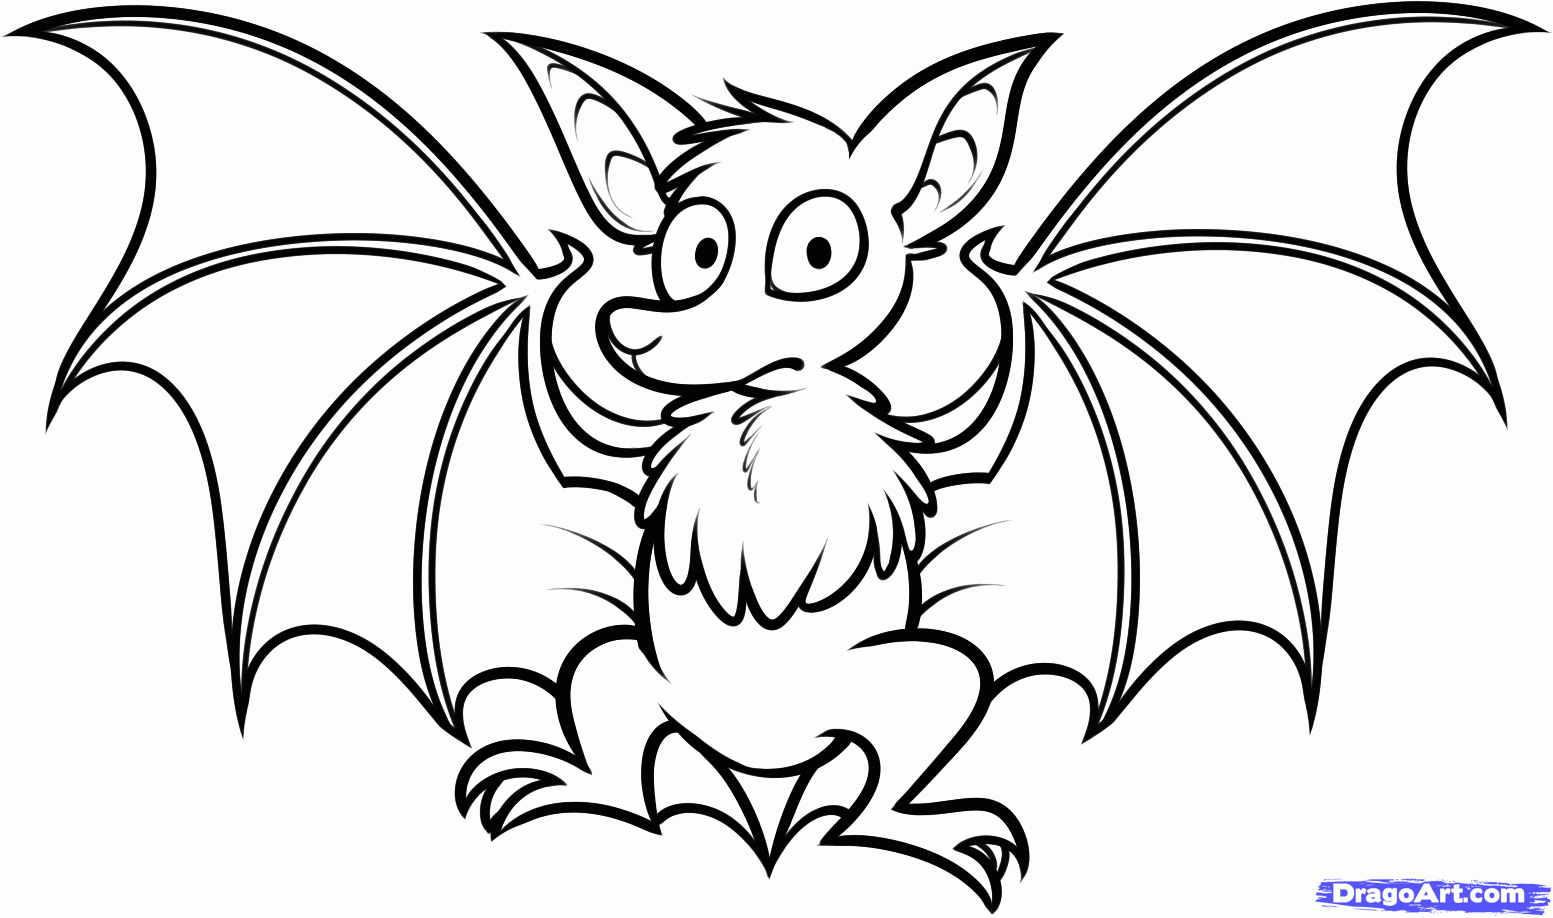 How to draw a. Bats clipart fruit bat